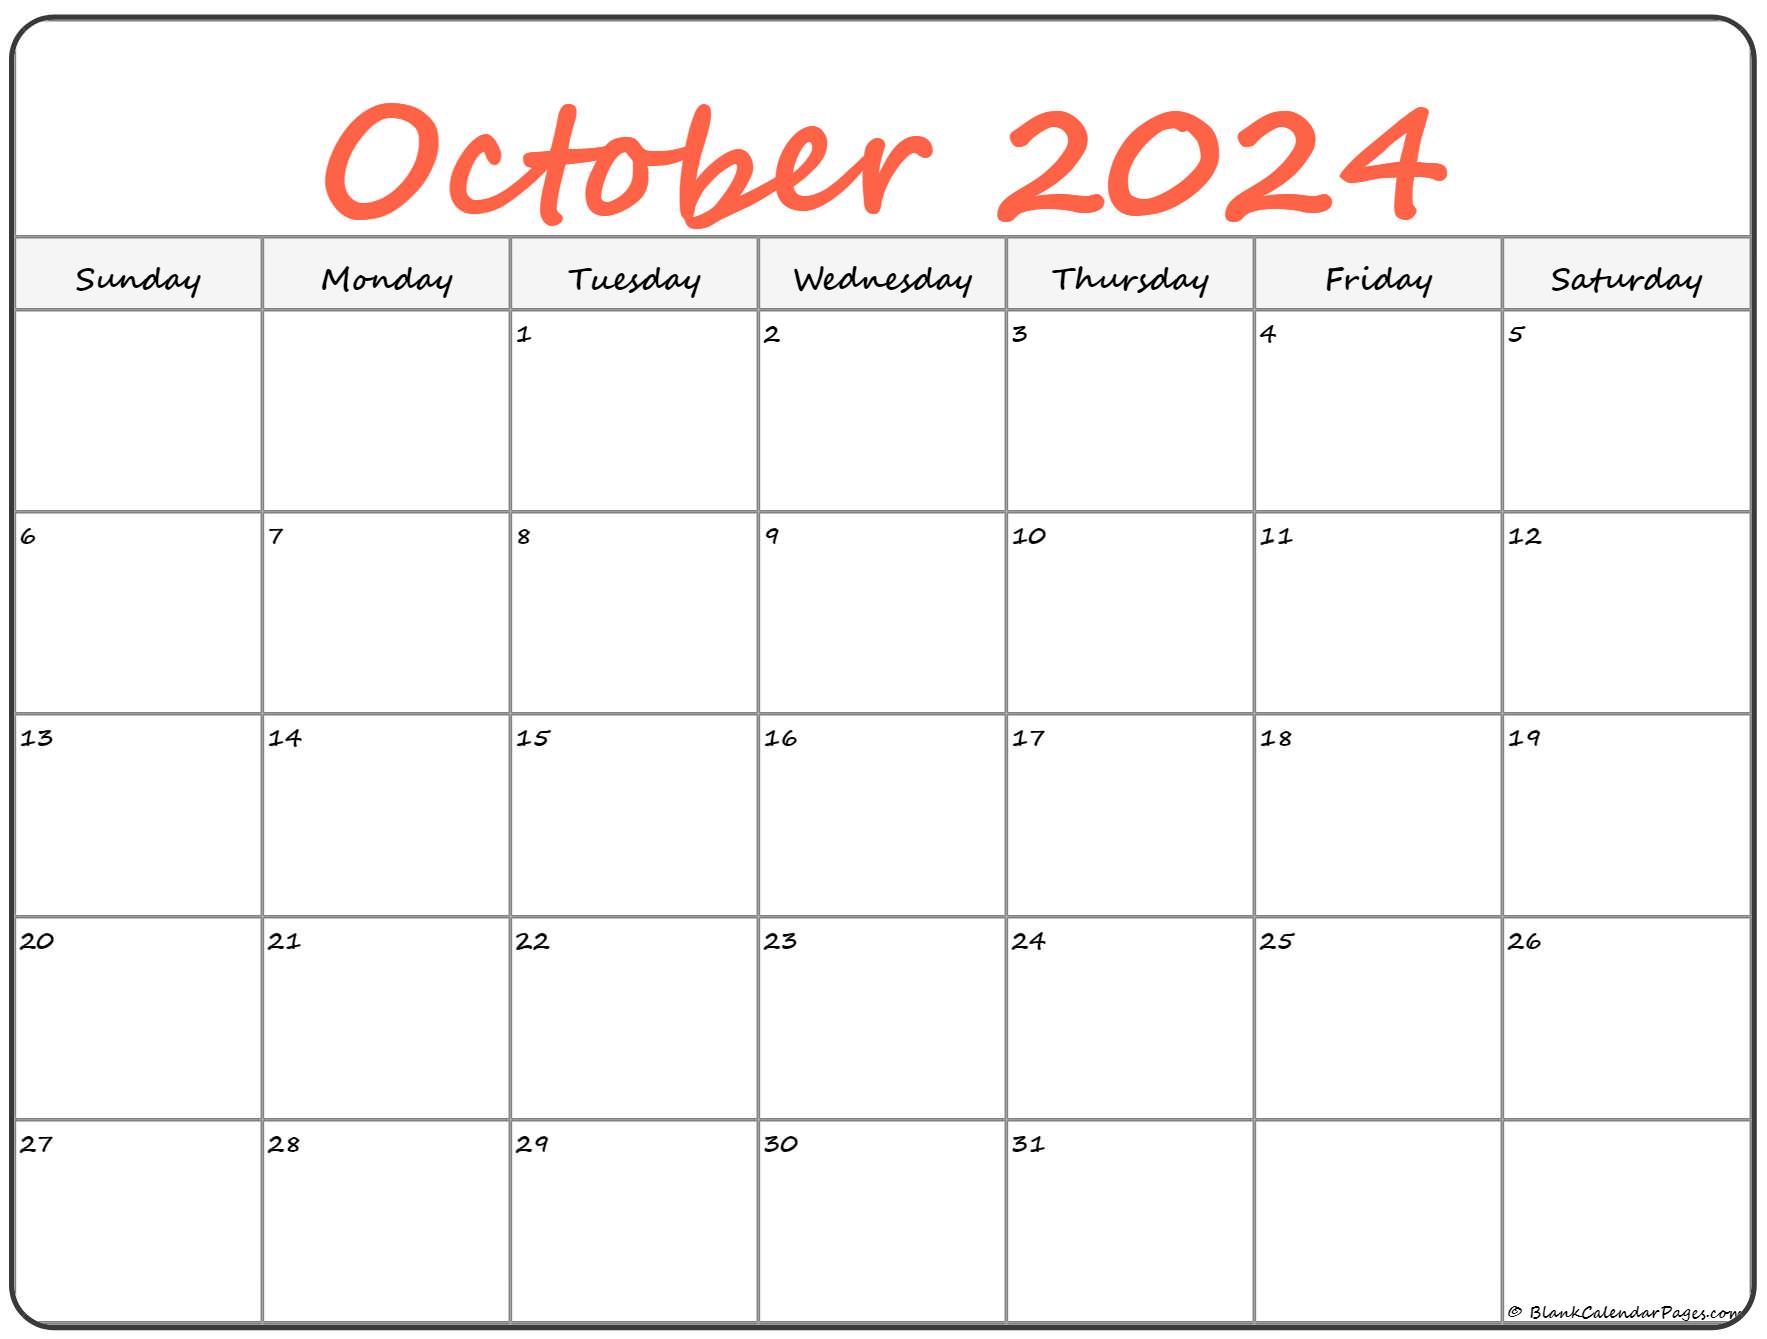 October 2022 Calendar Template October 2022 Calendar | Free Printable Calendar Templates